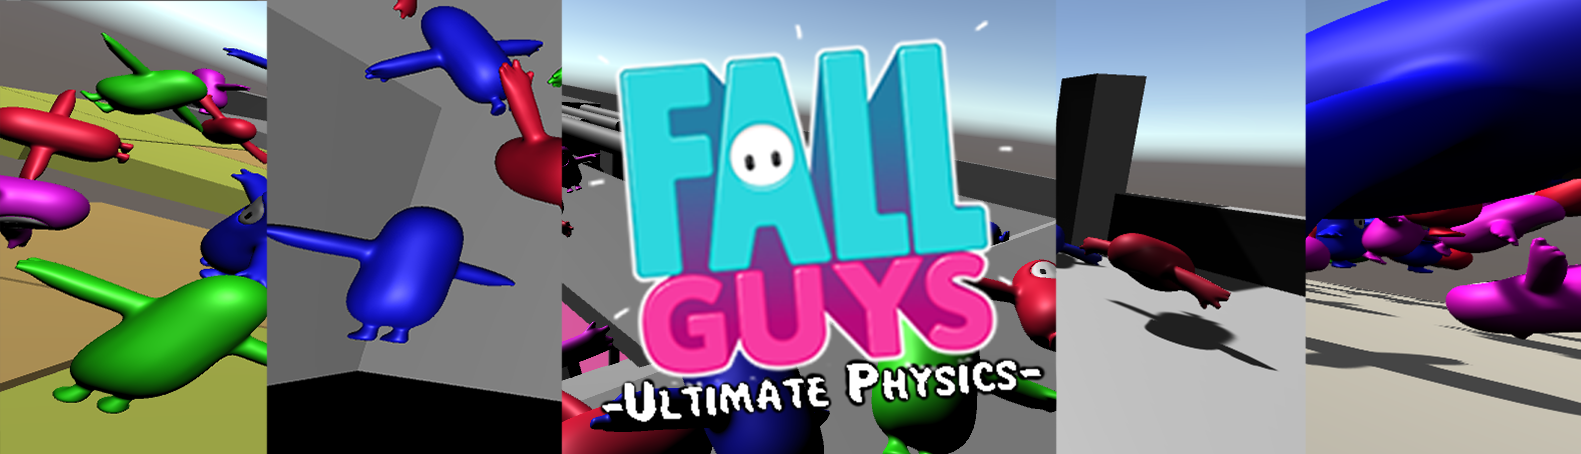 Fall Guys: Ultimate Physics